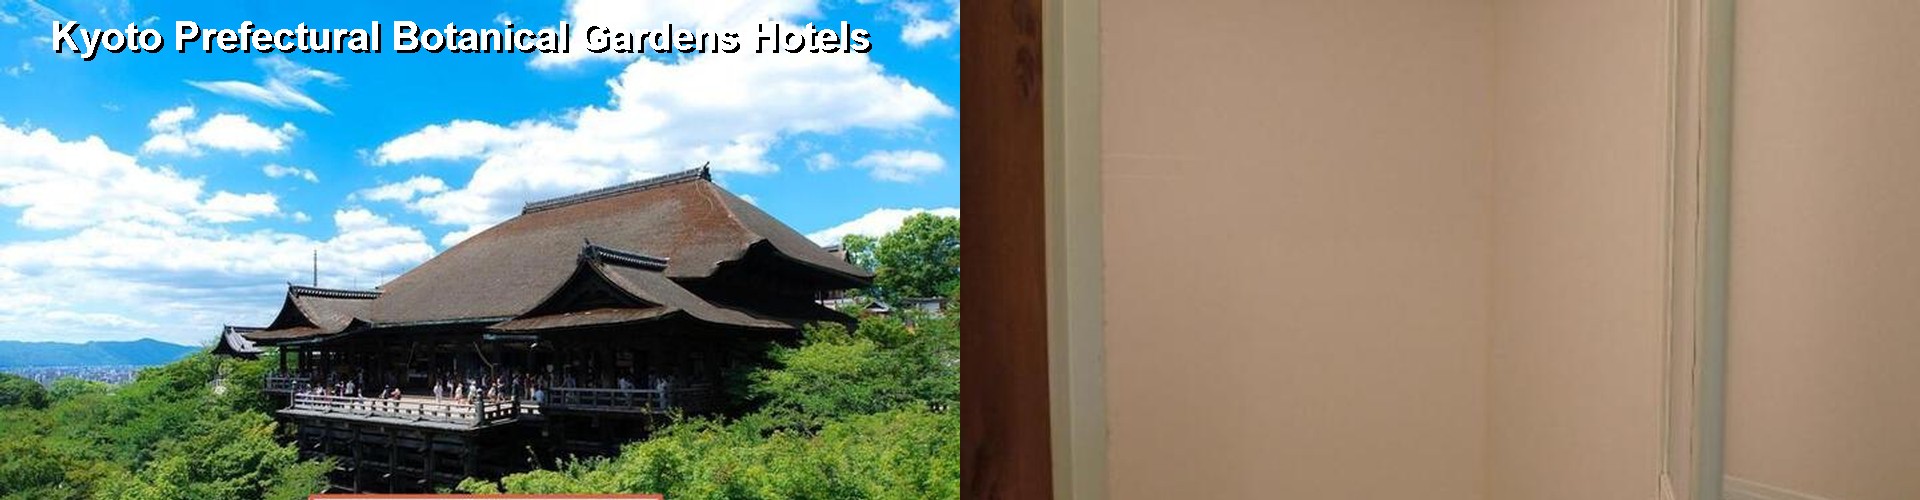 5 Best Hotels near Kyoto Prefectural Botanical Gardens